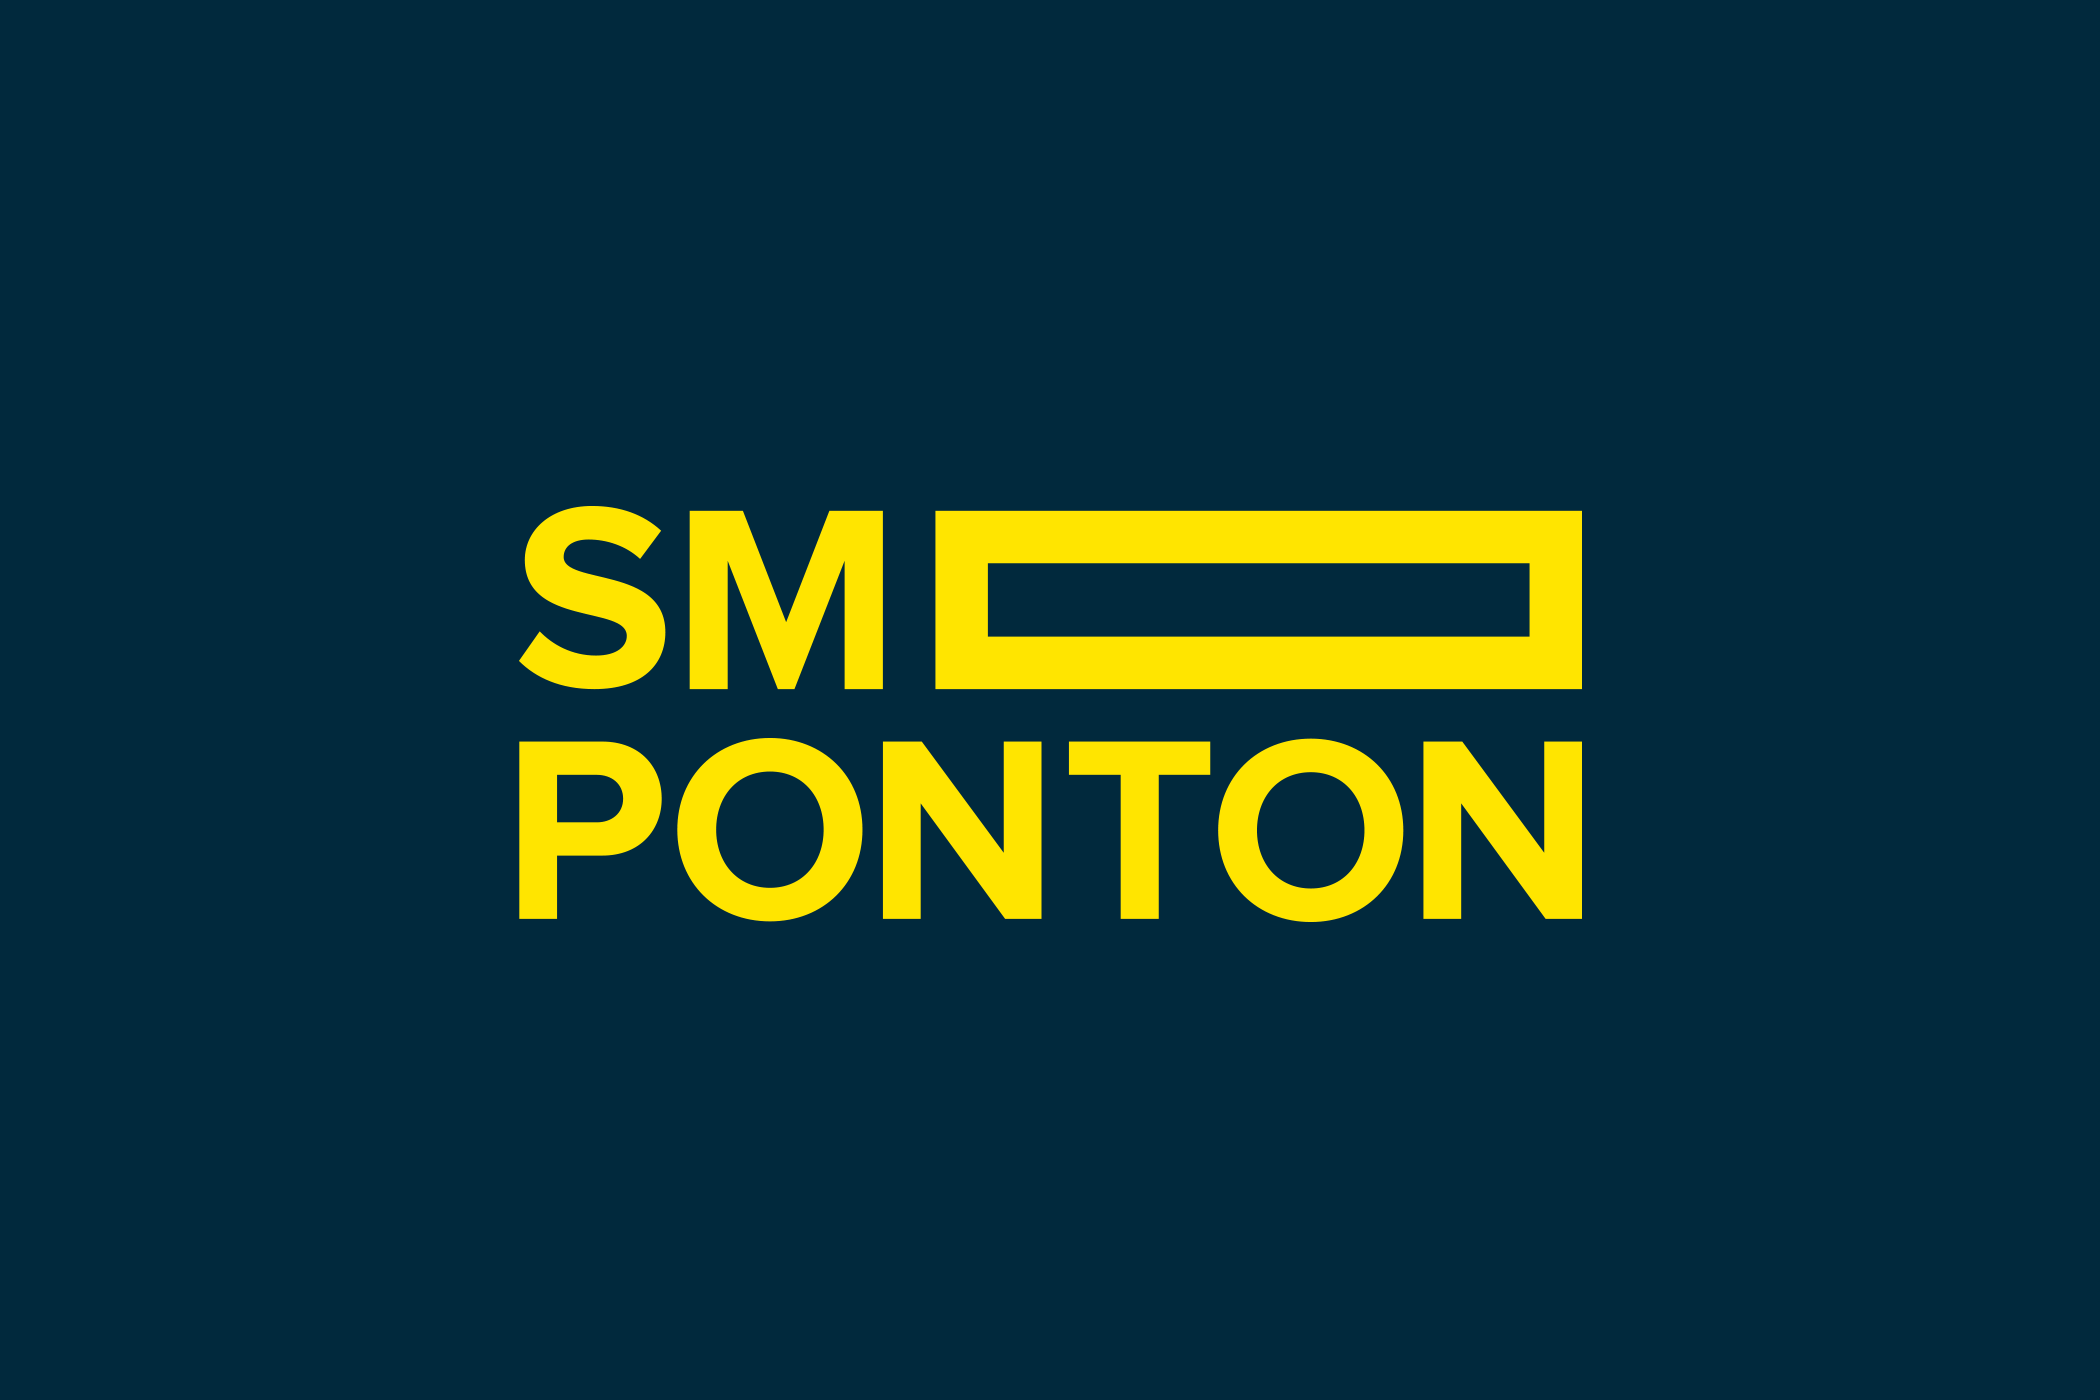 SM PONTON